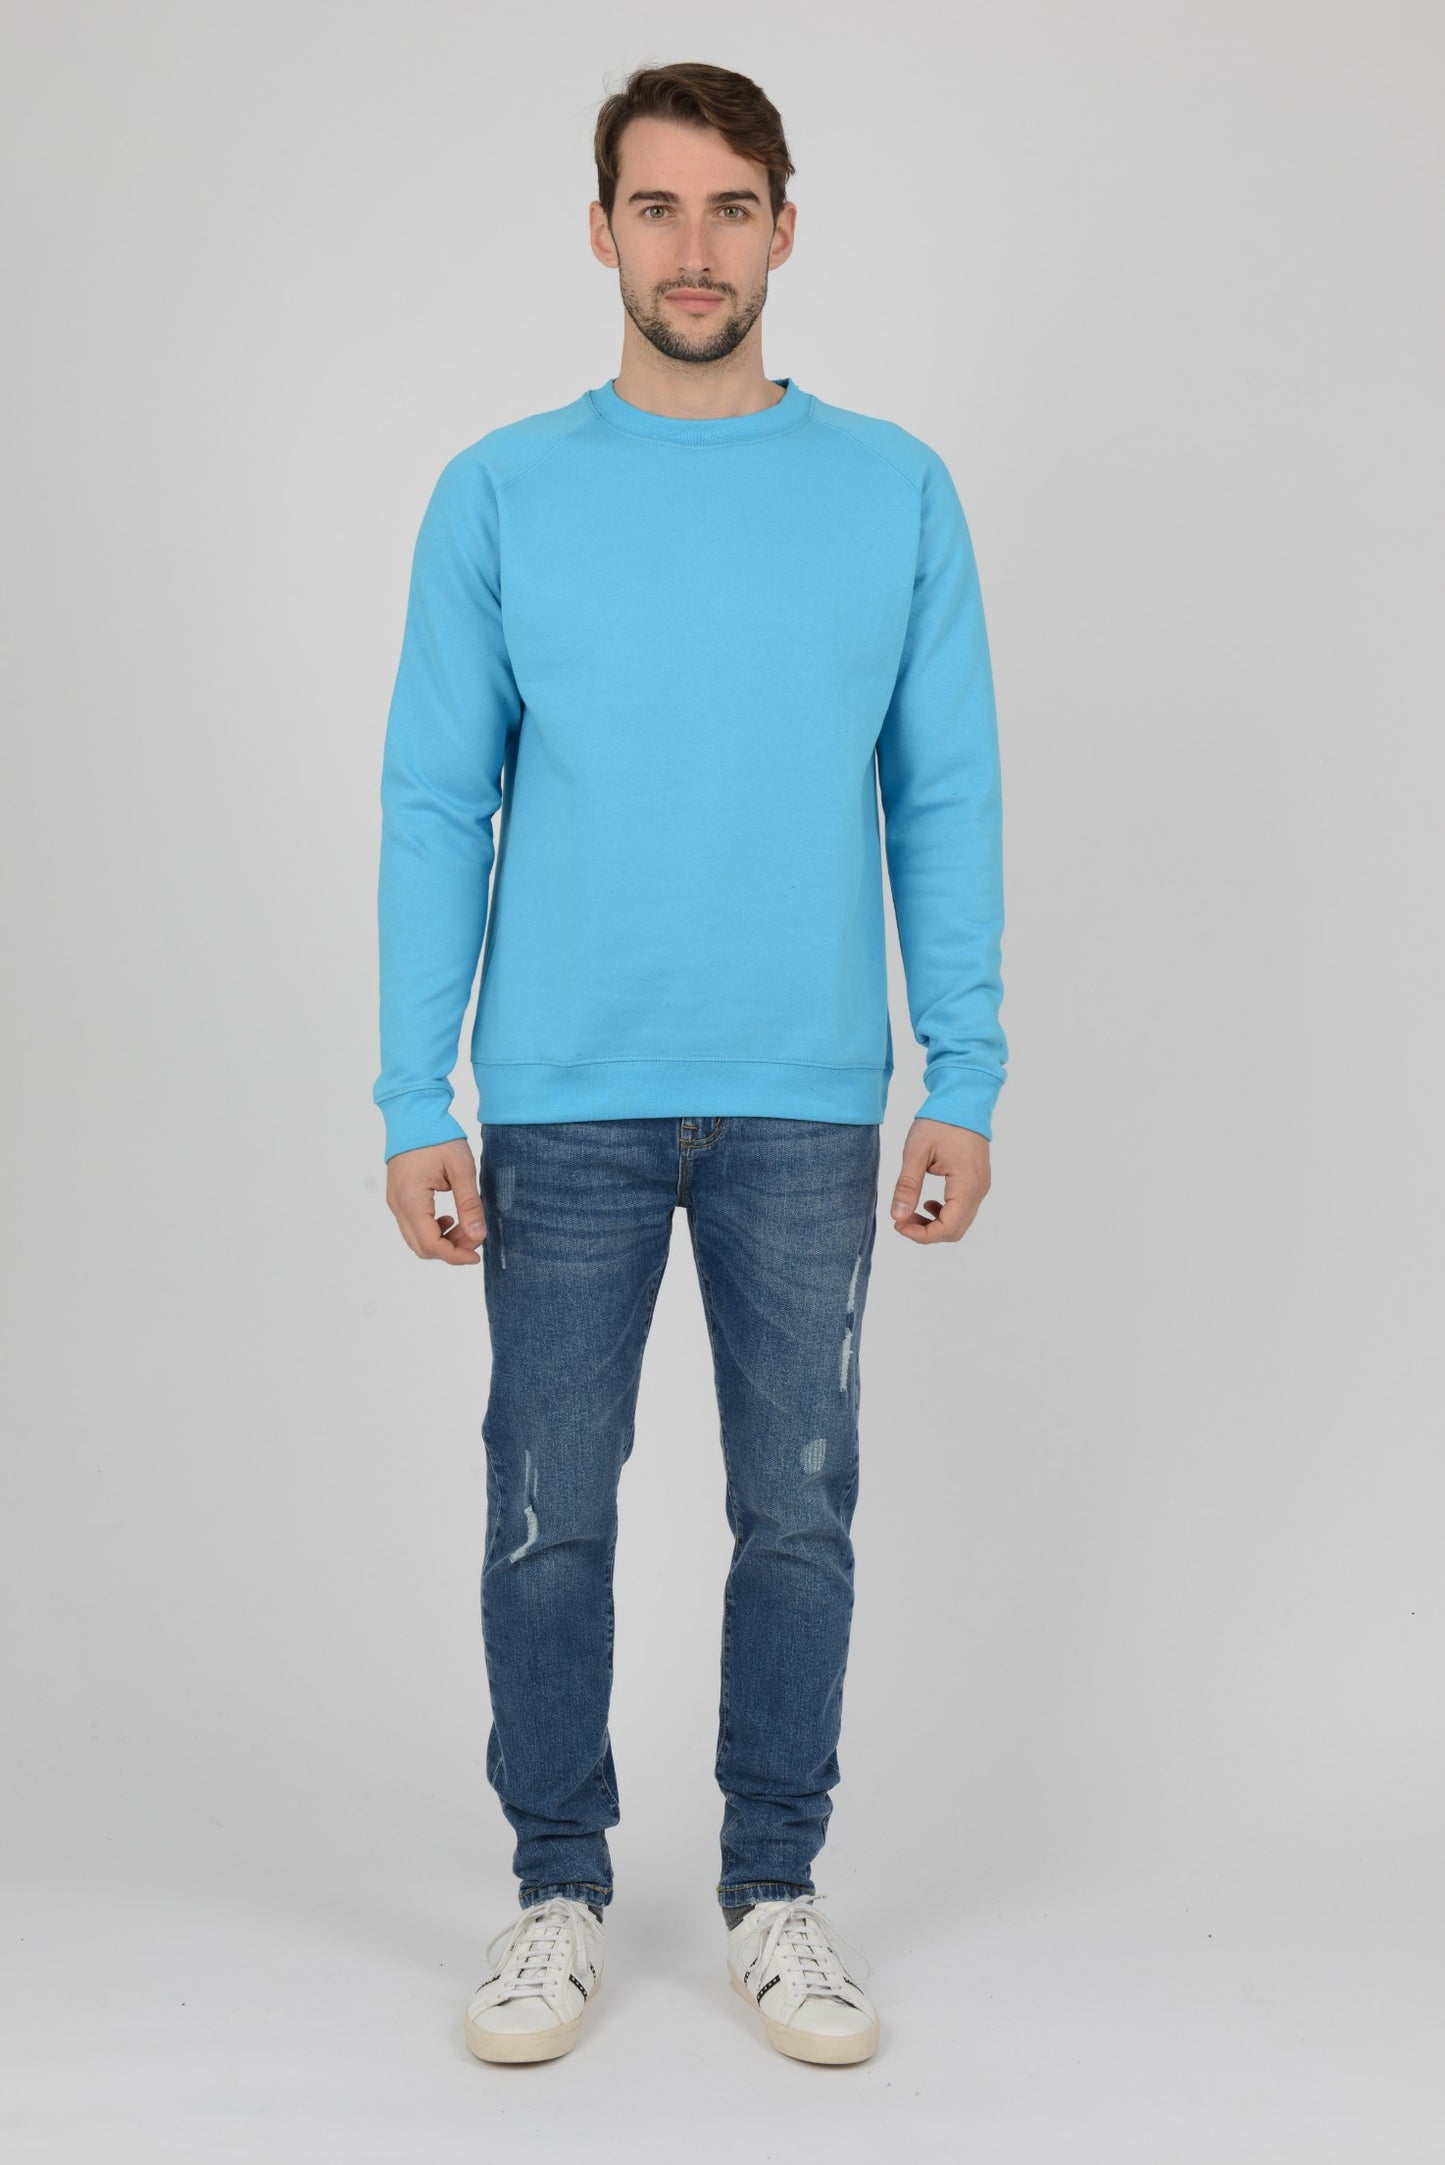 Mens-Raglan-Sweatshirt-Jersey-Azure-Blue